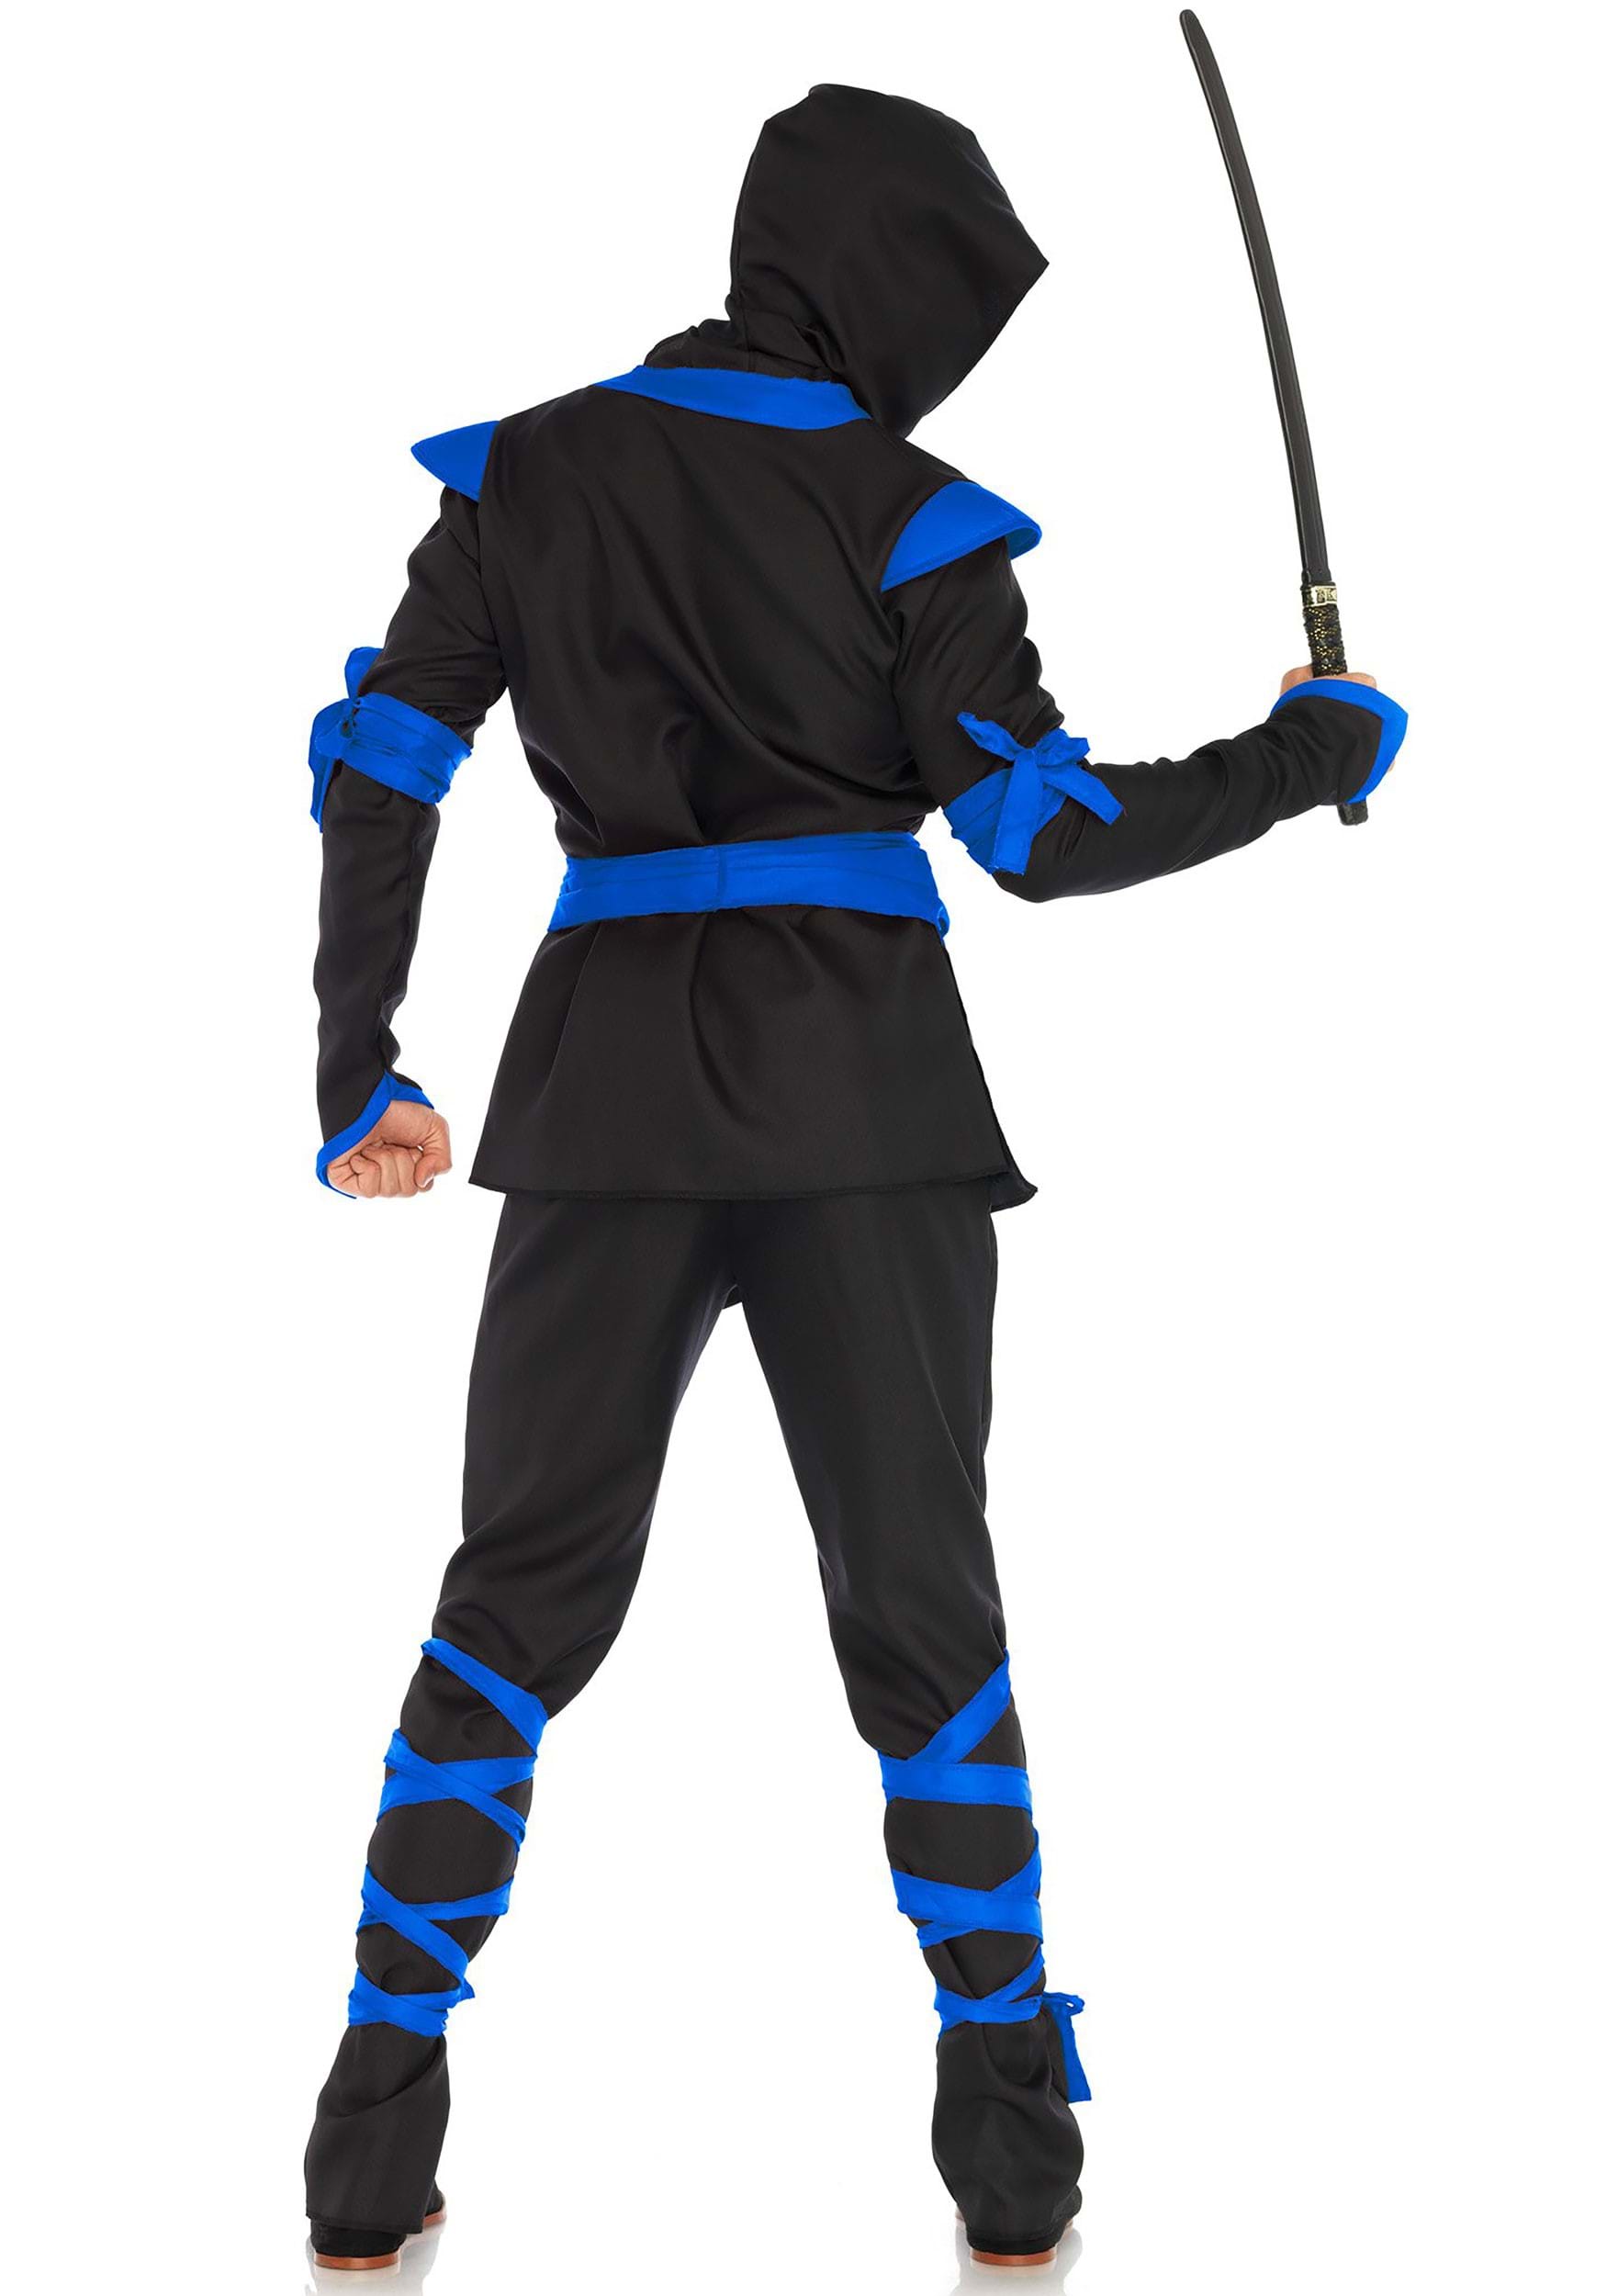 https://images.fun.com/products/73202/2-1-196195/mens-blue-ninja-.jpg